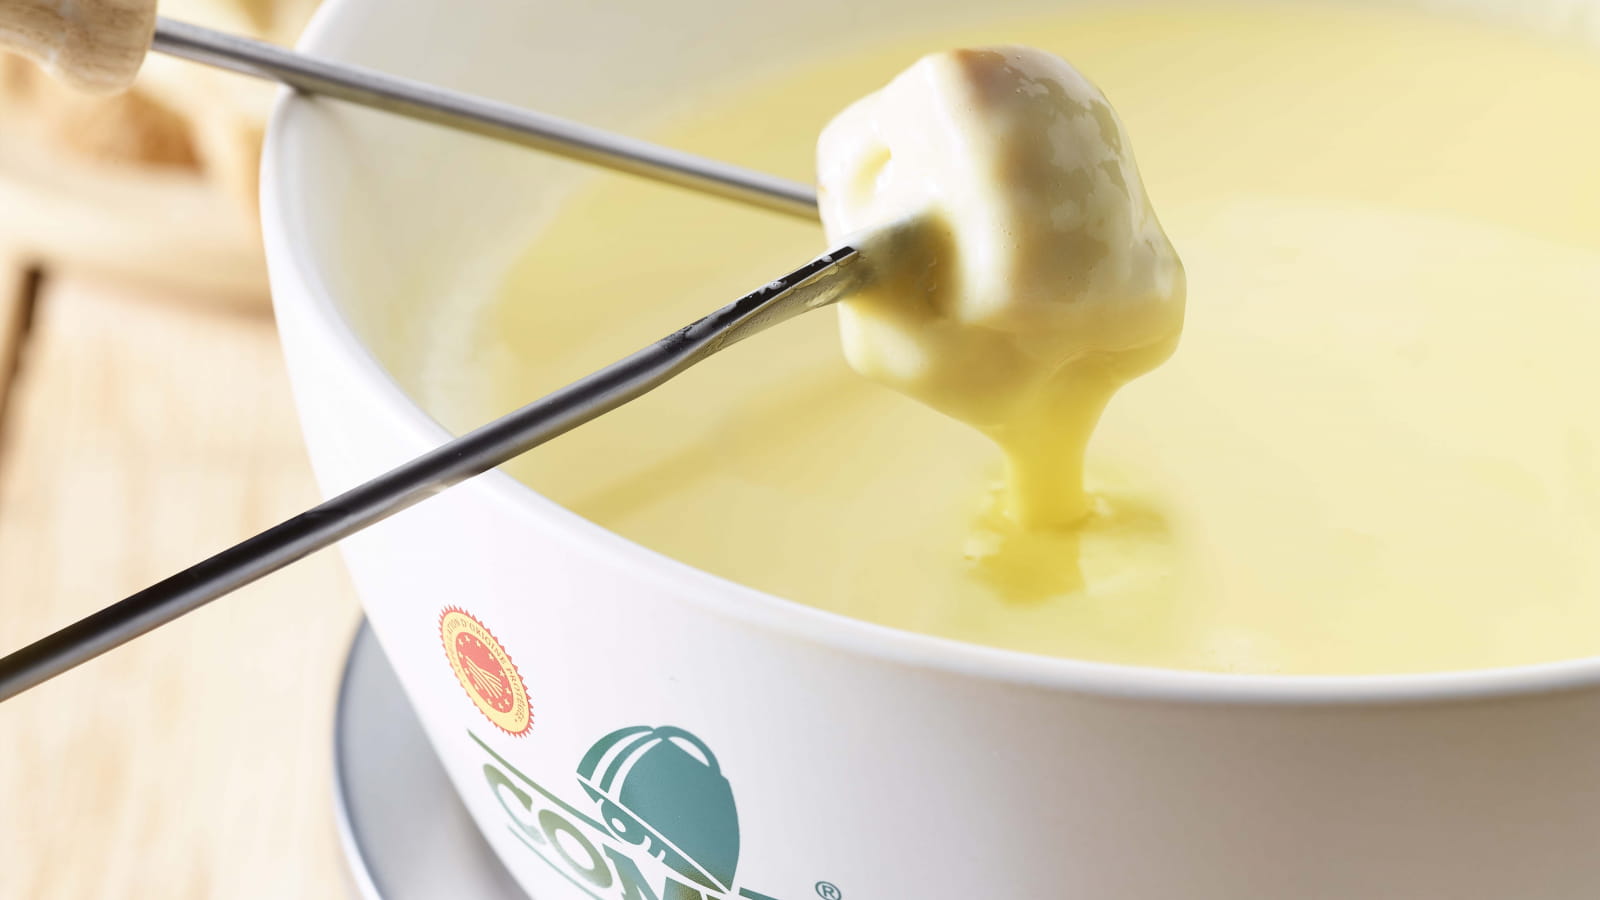 The authentic recipe for comté cheese fondue